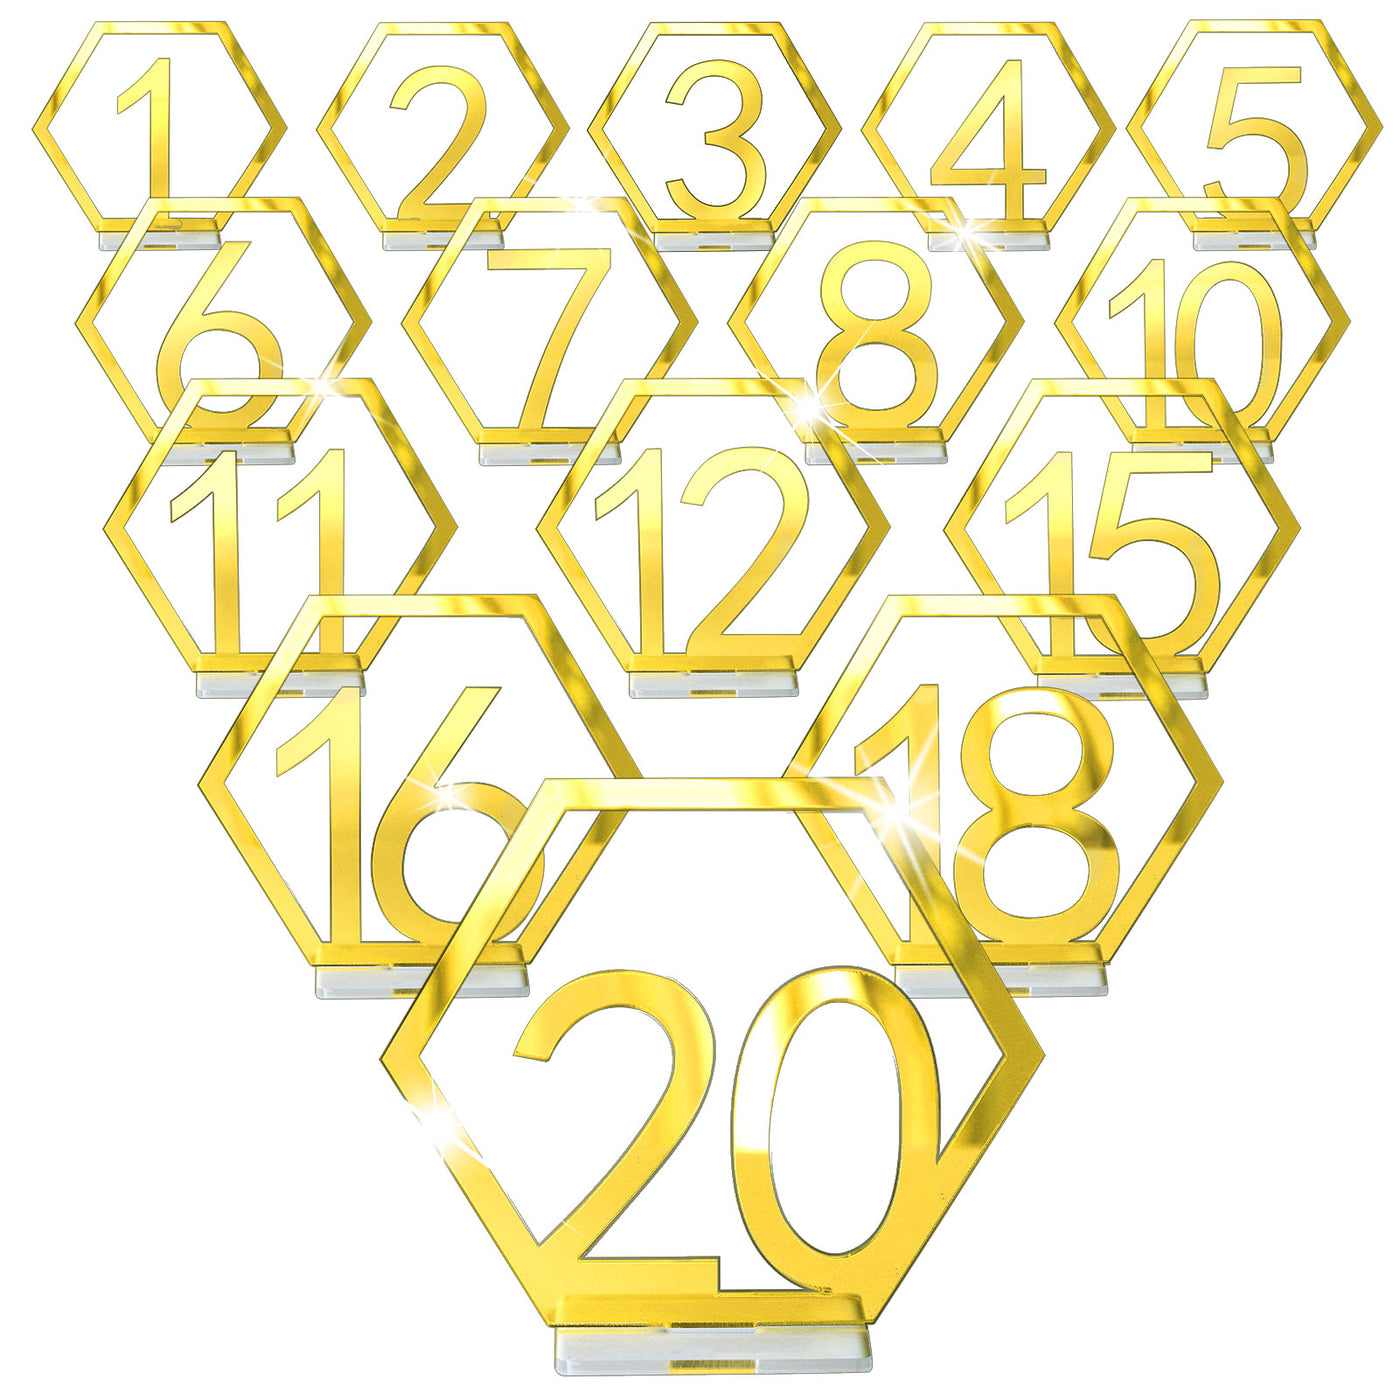 Golden Table Number Holders Set of 20